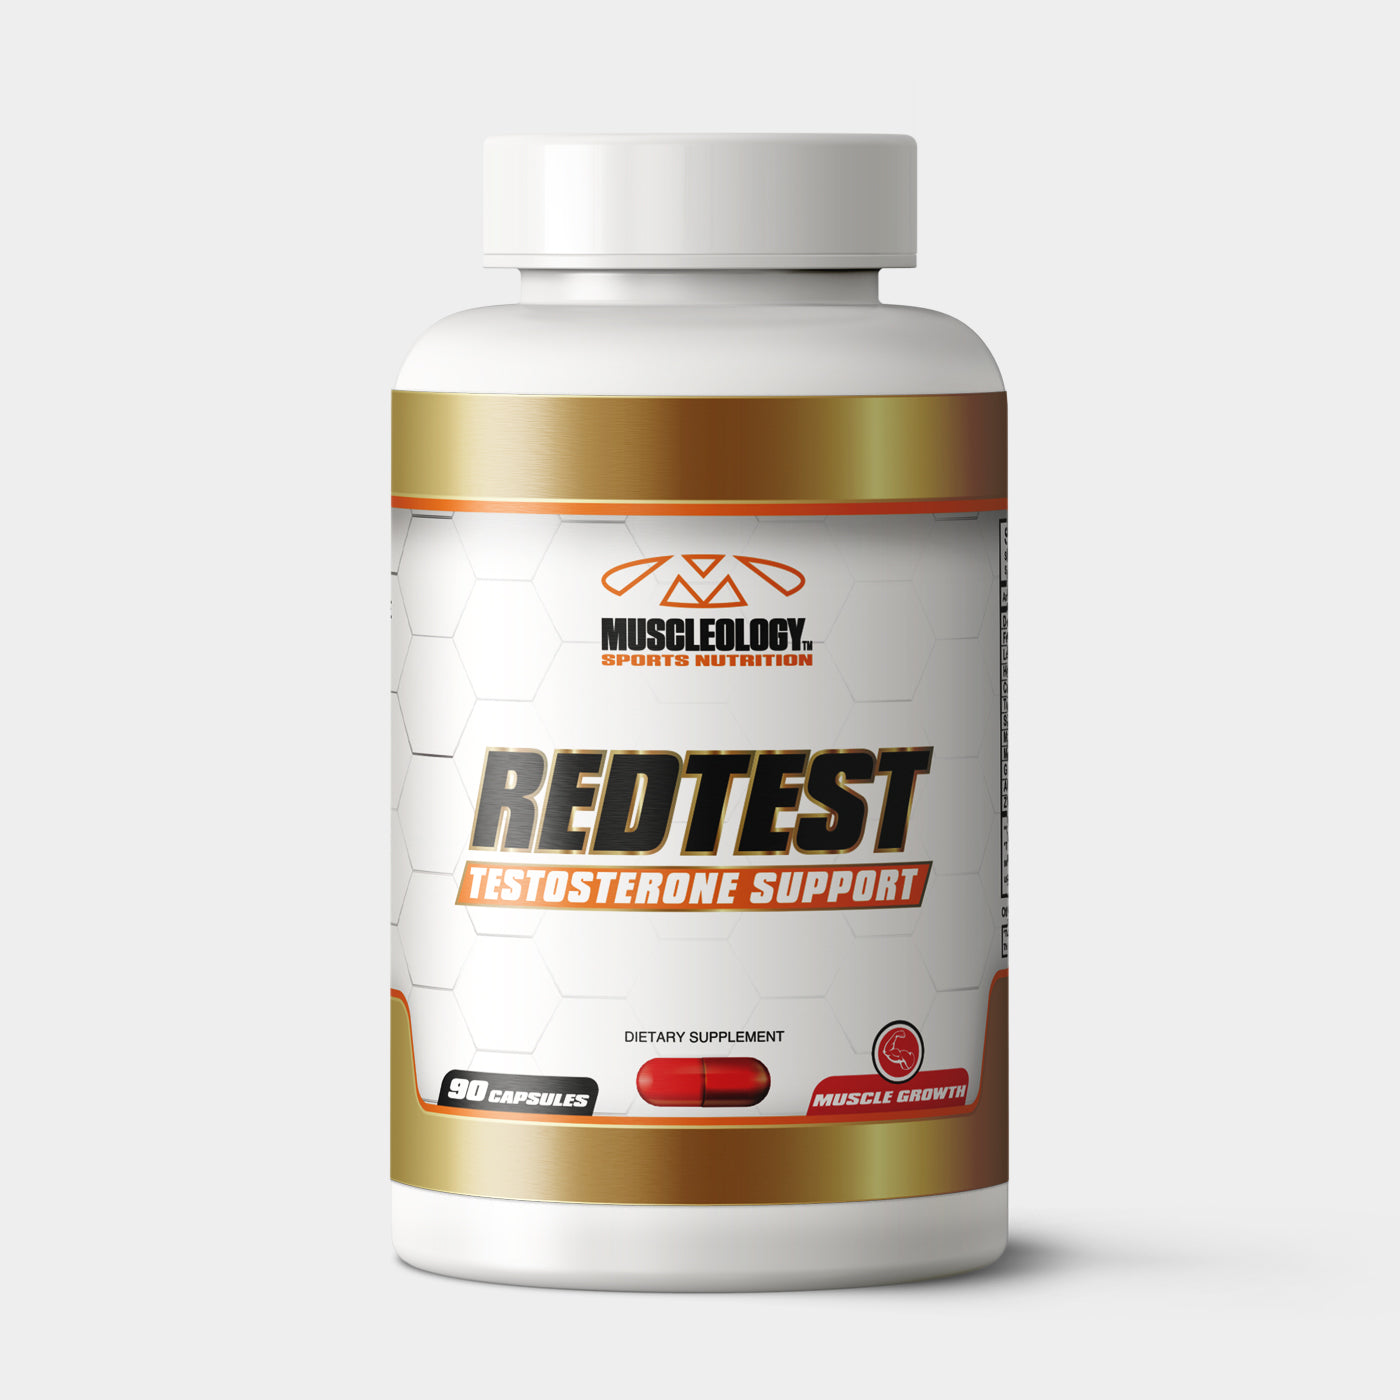 RedTest™ - Testosterone Support